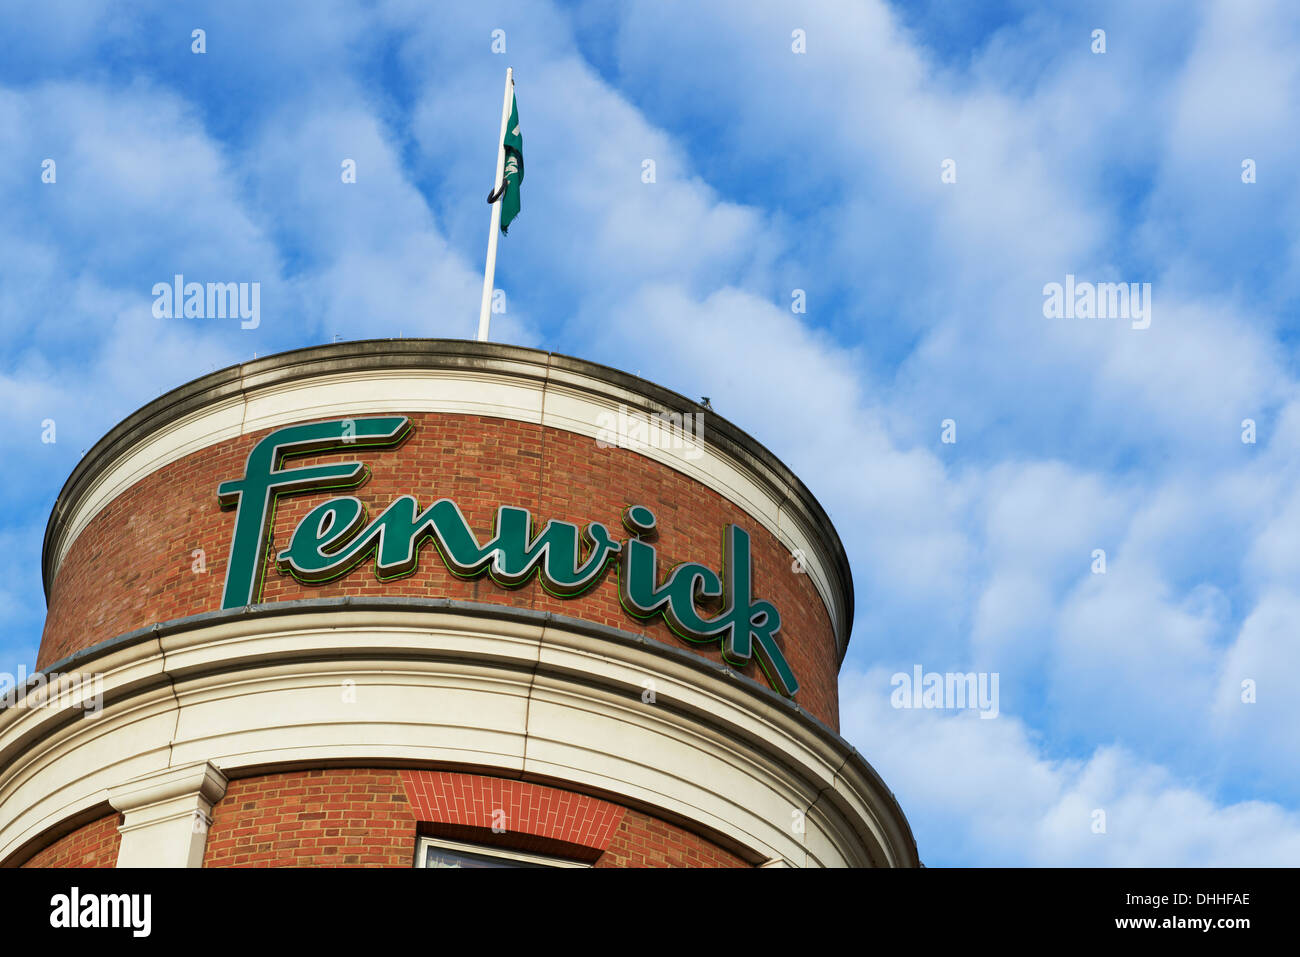 Fenwick Store logo on the Canterbury shop Stock Photo